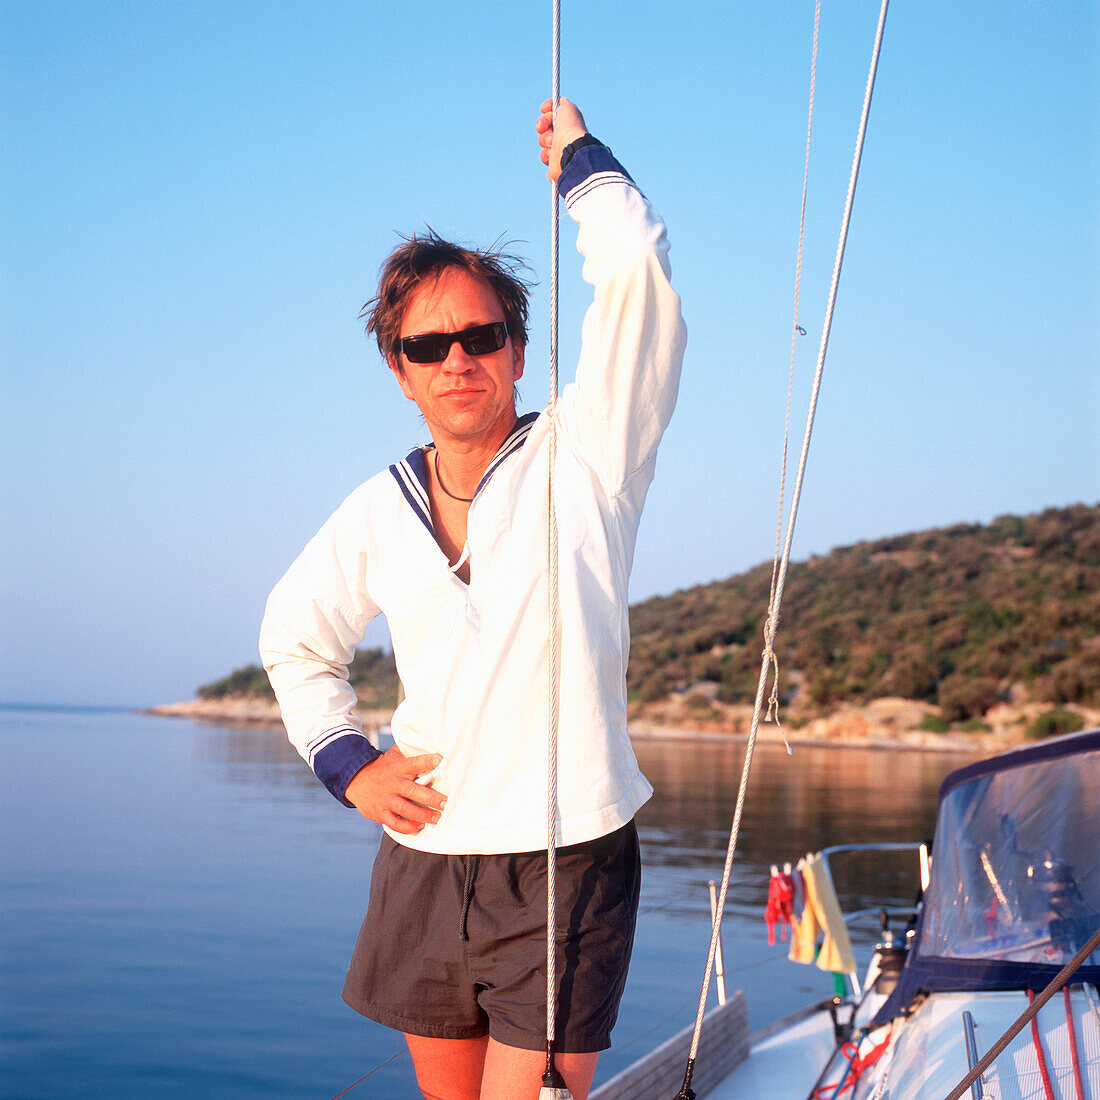 Man wearing sailor suit standing on sailboat, portrait, Adriatic Sea, Dalmatia, Croatia